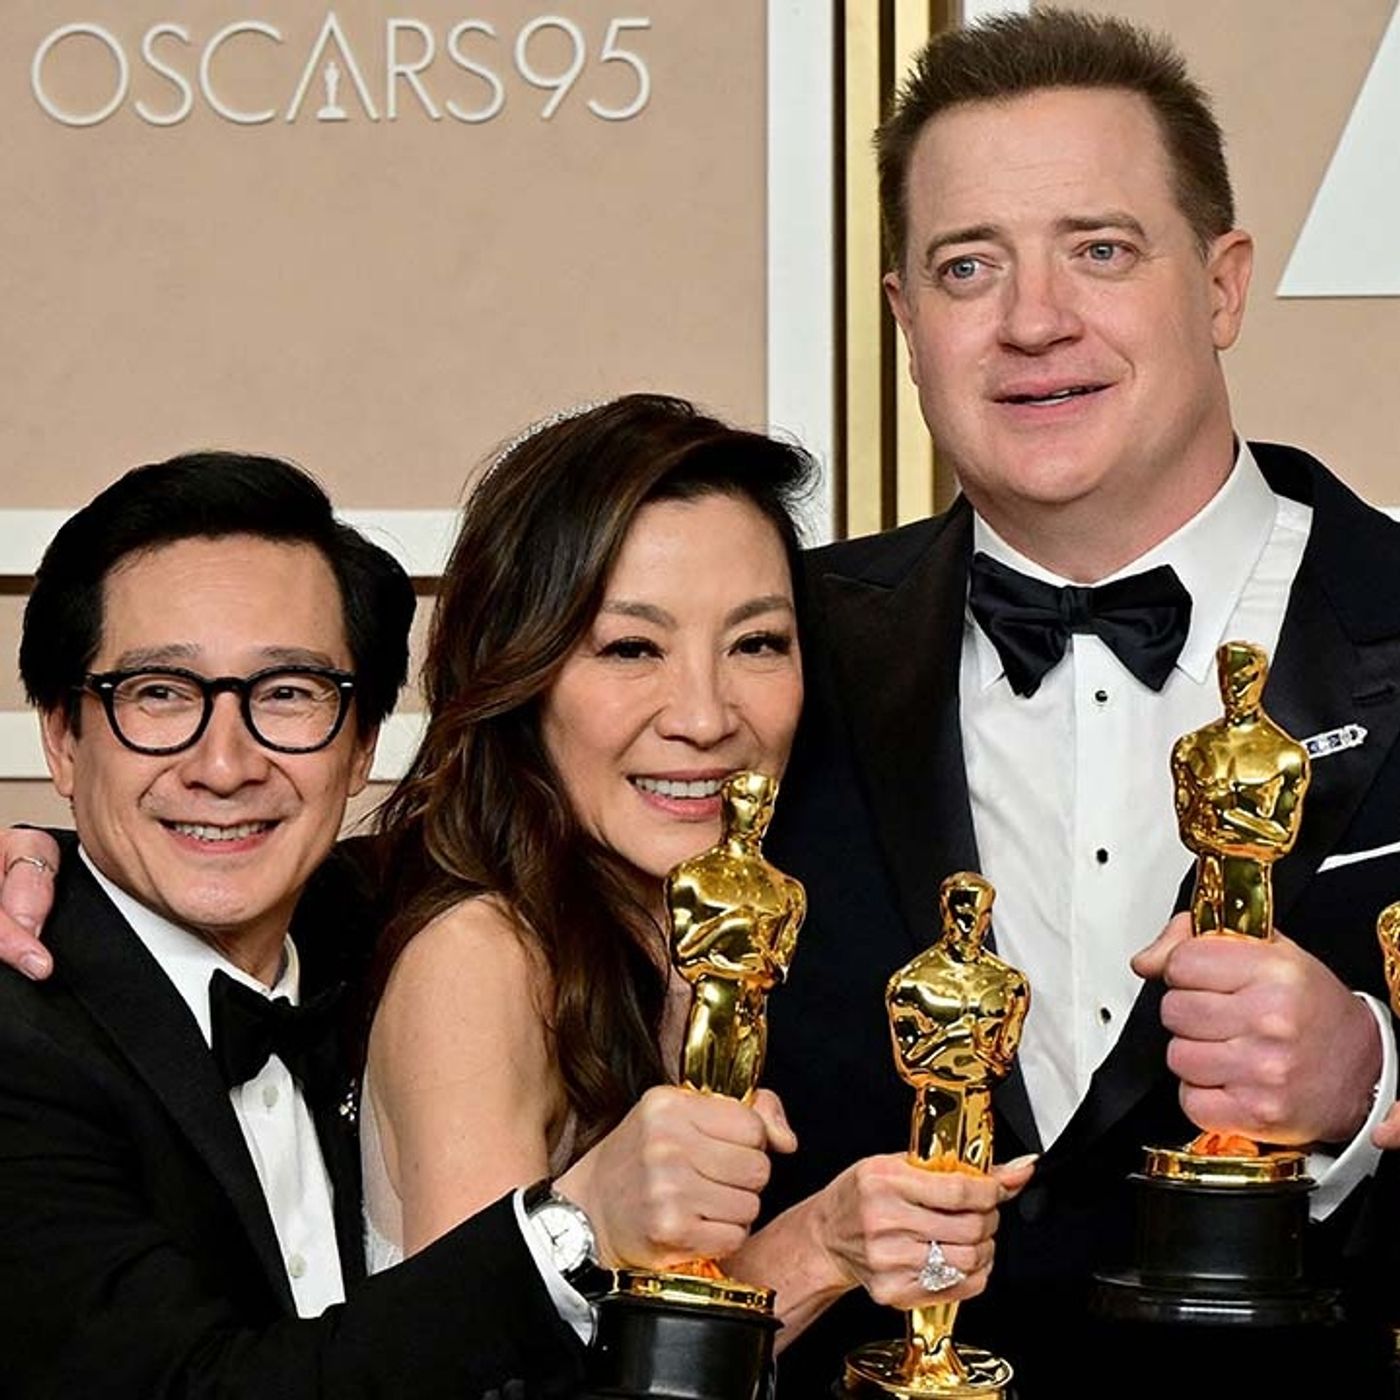 Oscars Recap, Who Won? Who Should've Won? What Do We Know?